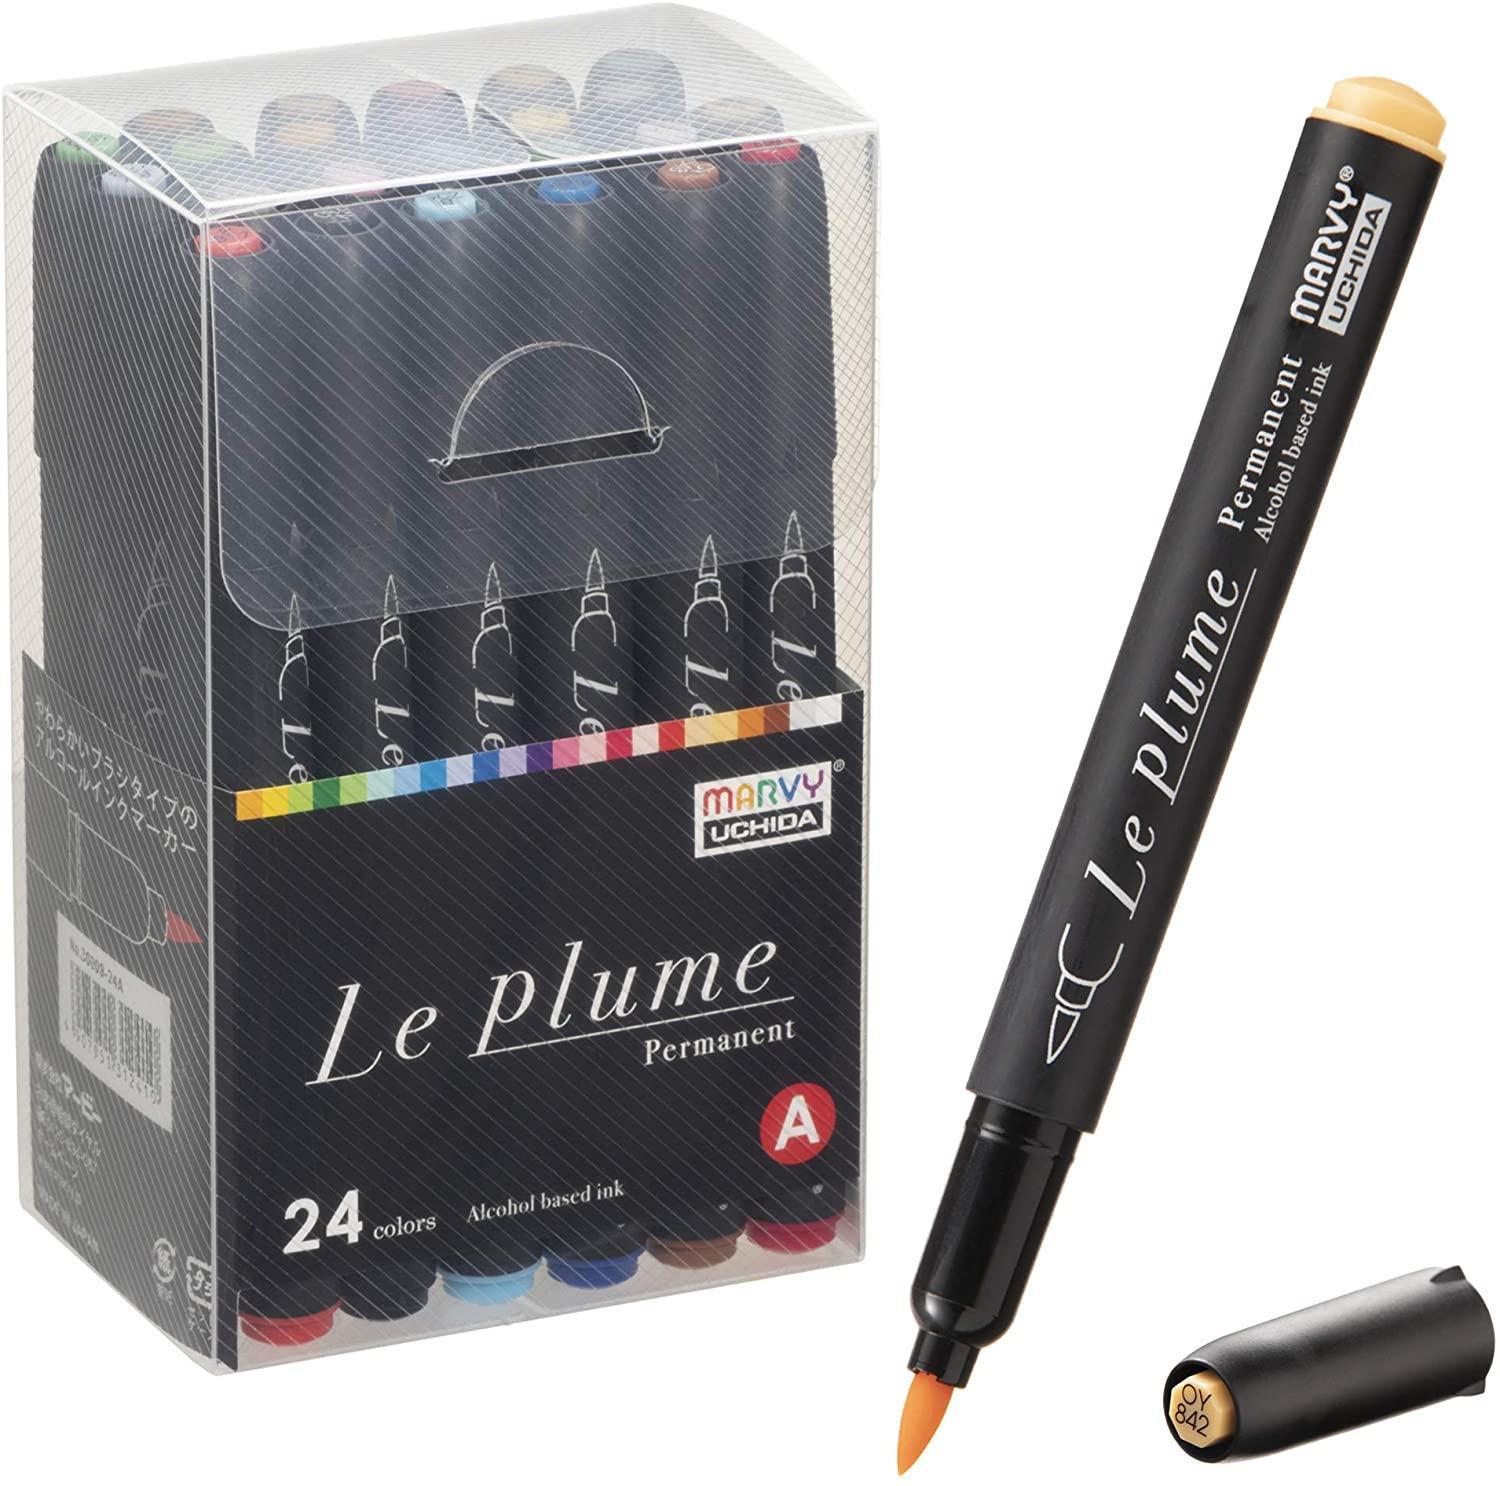 Marvy Le Plume Permanent marker (Alcohol based ink) 24 Basic colour set